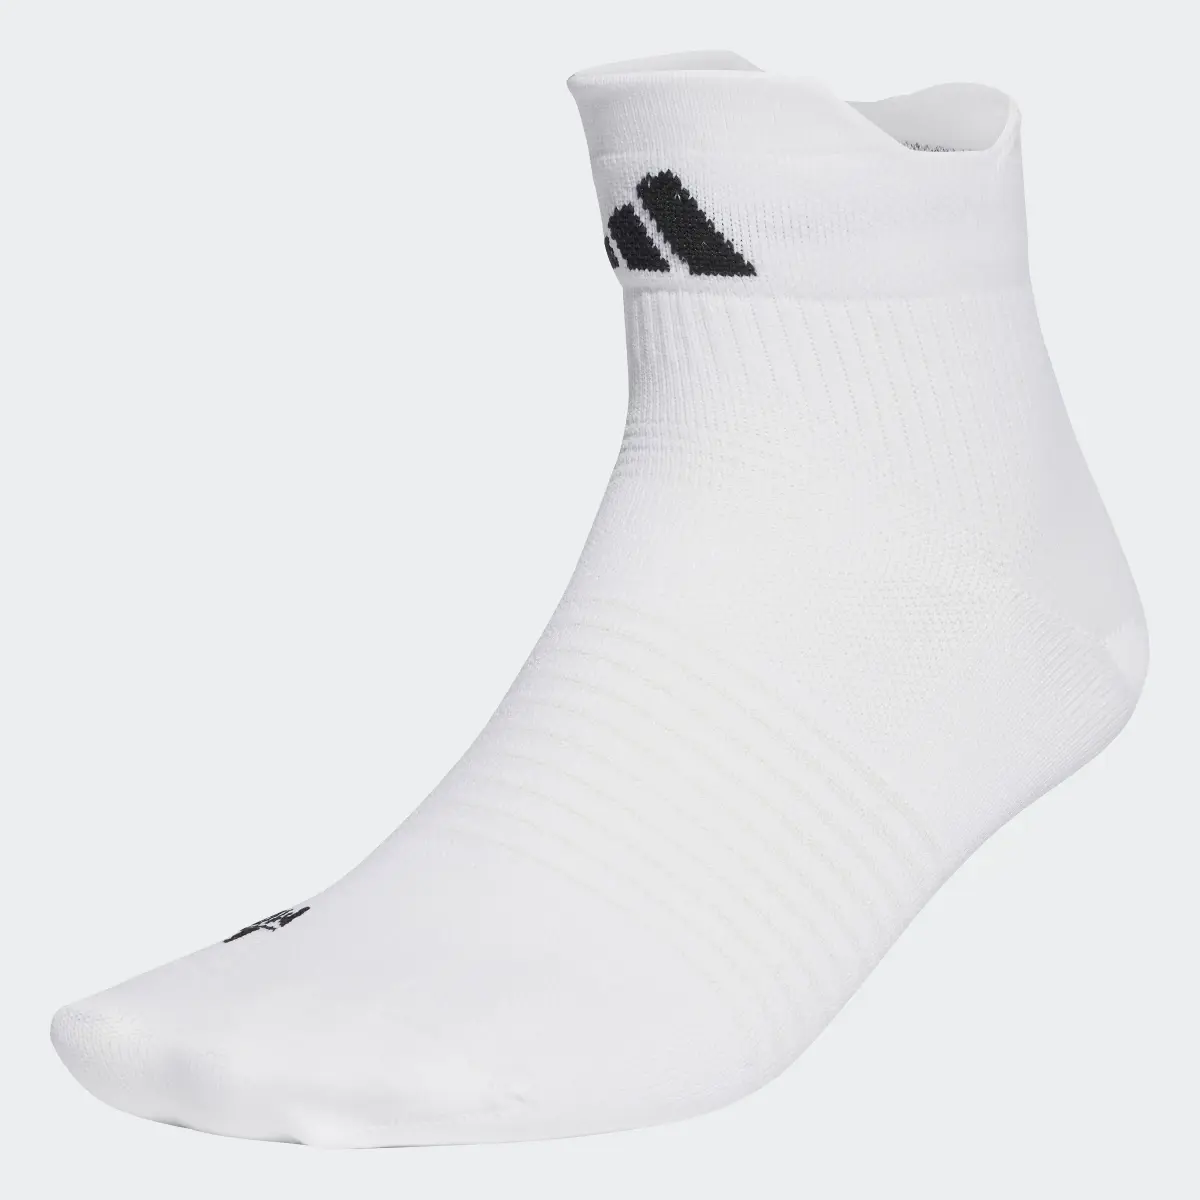 Adidas Performance Designed for Sport Ankle Socks. 1